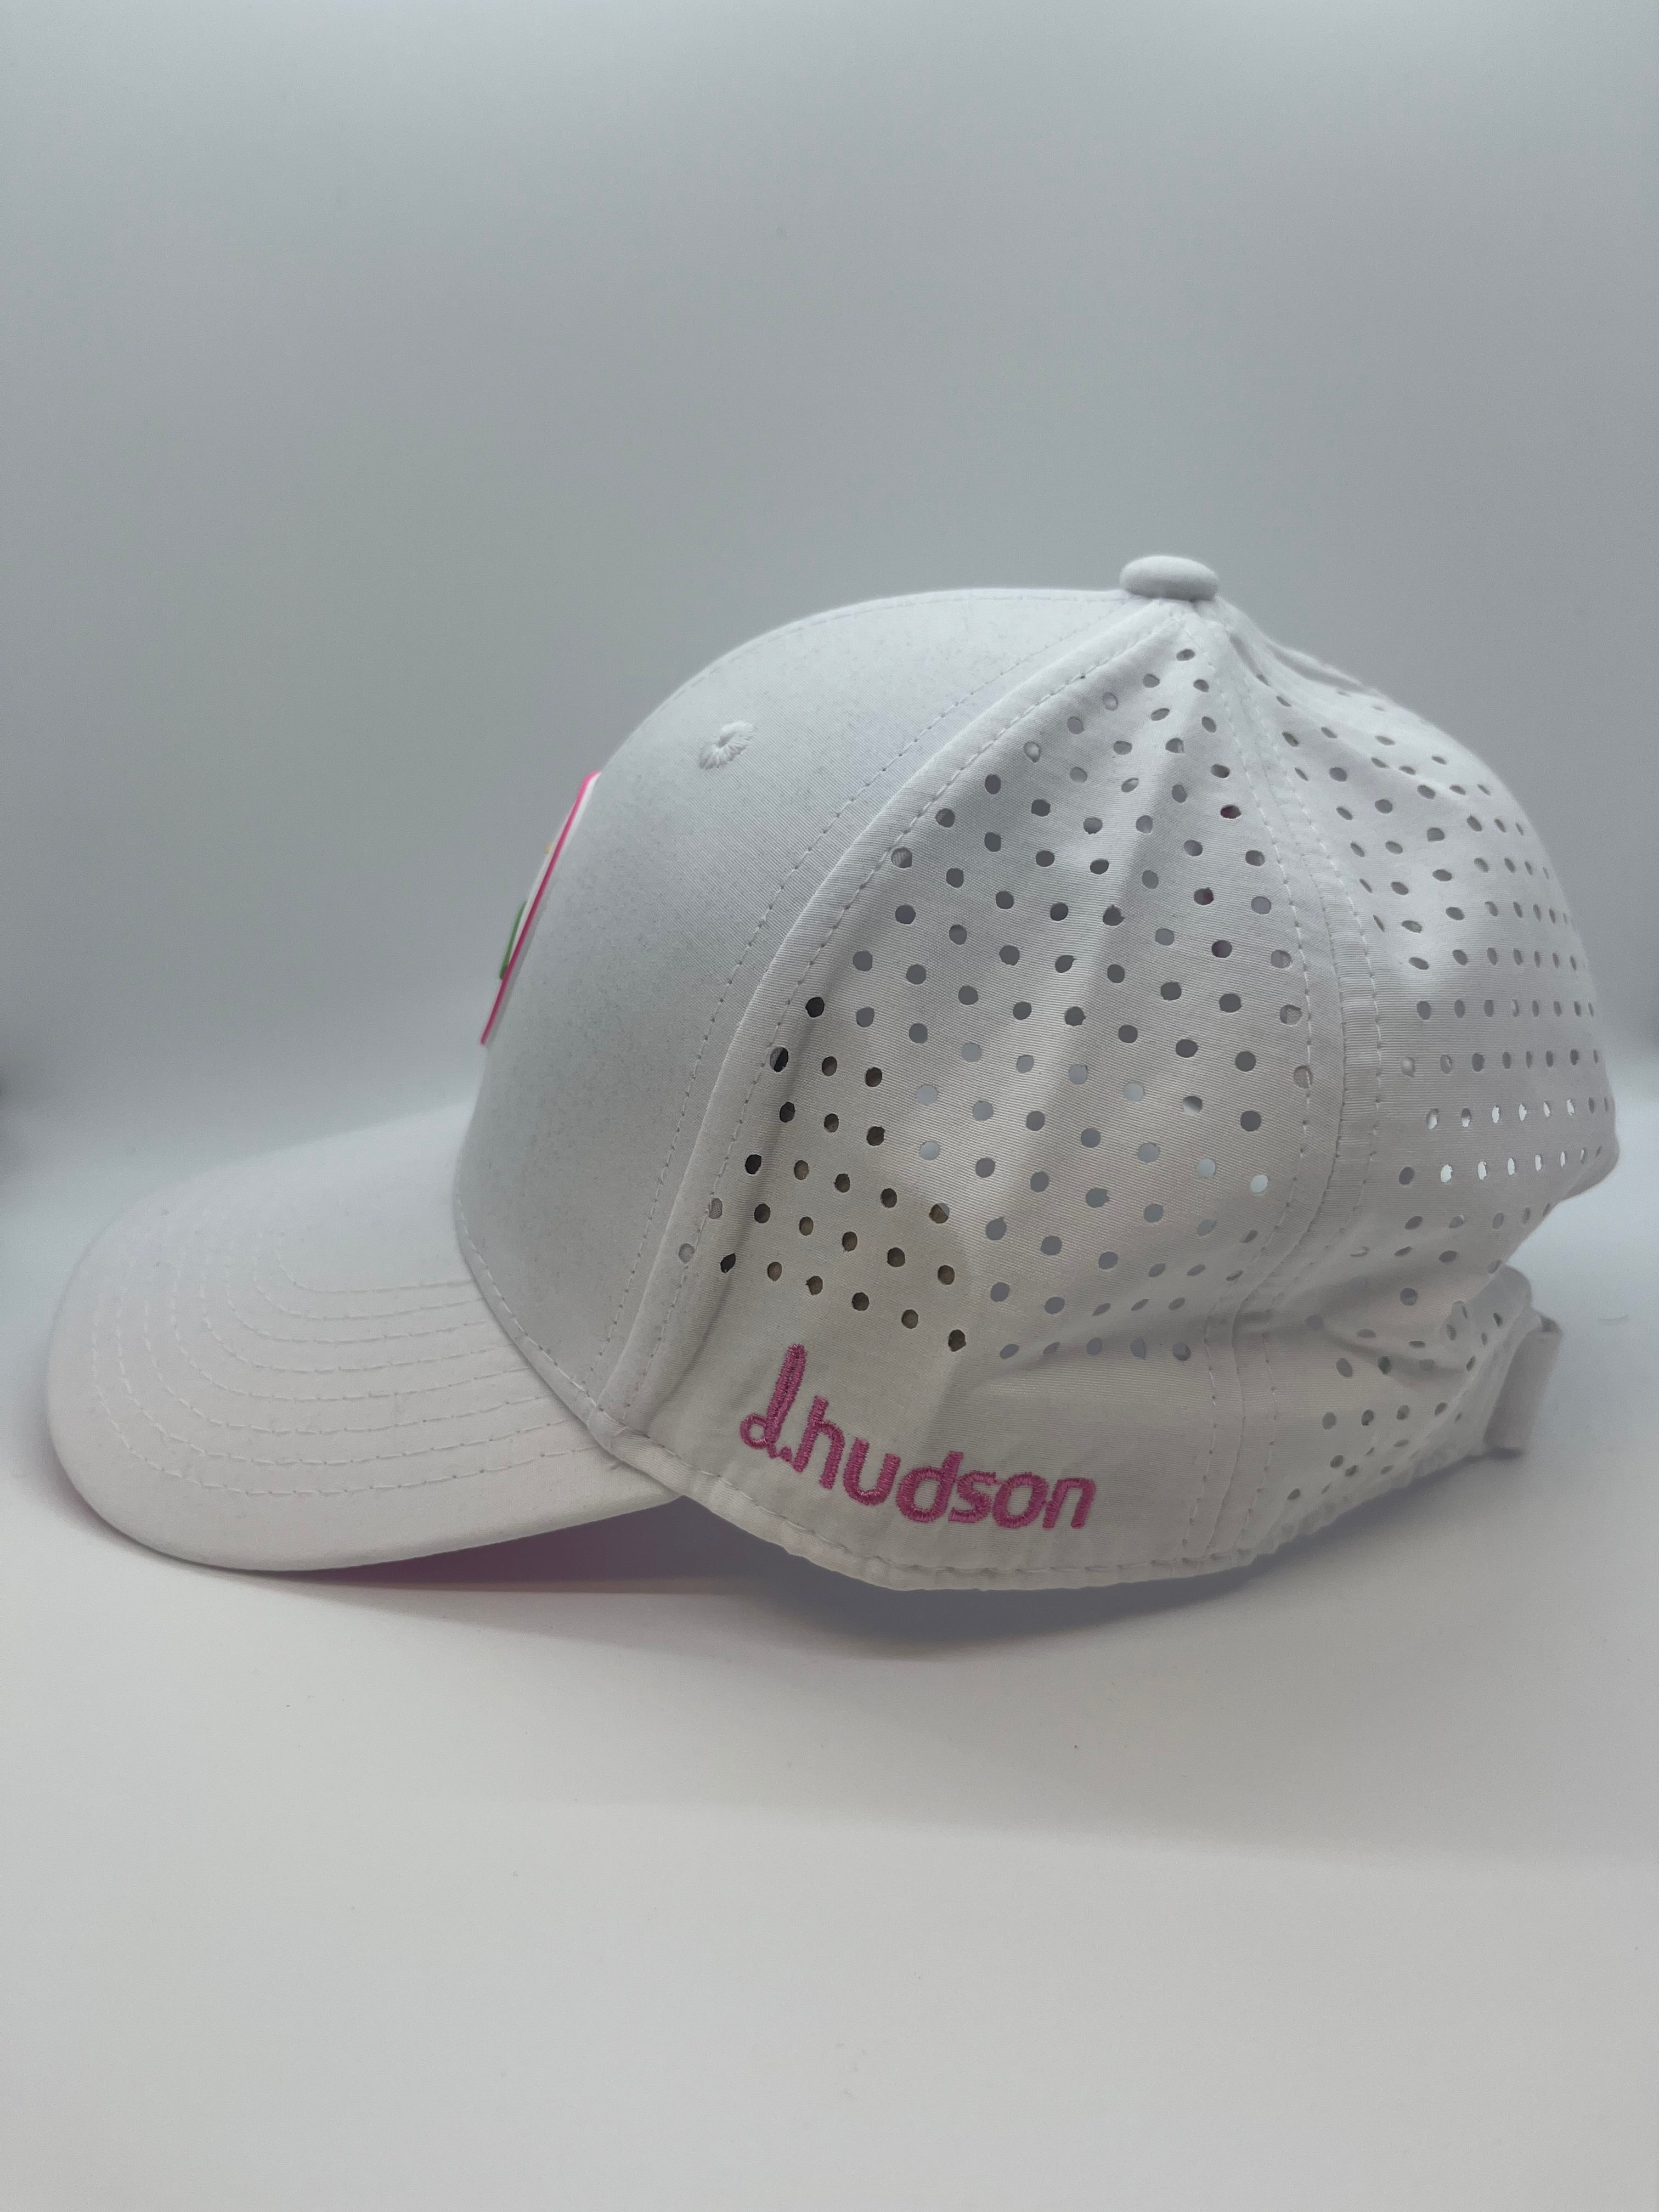 D.Hudson X Golf Event Planning Golf Hat (White/Pink)